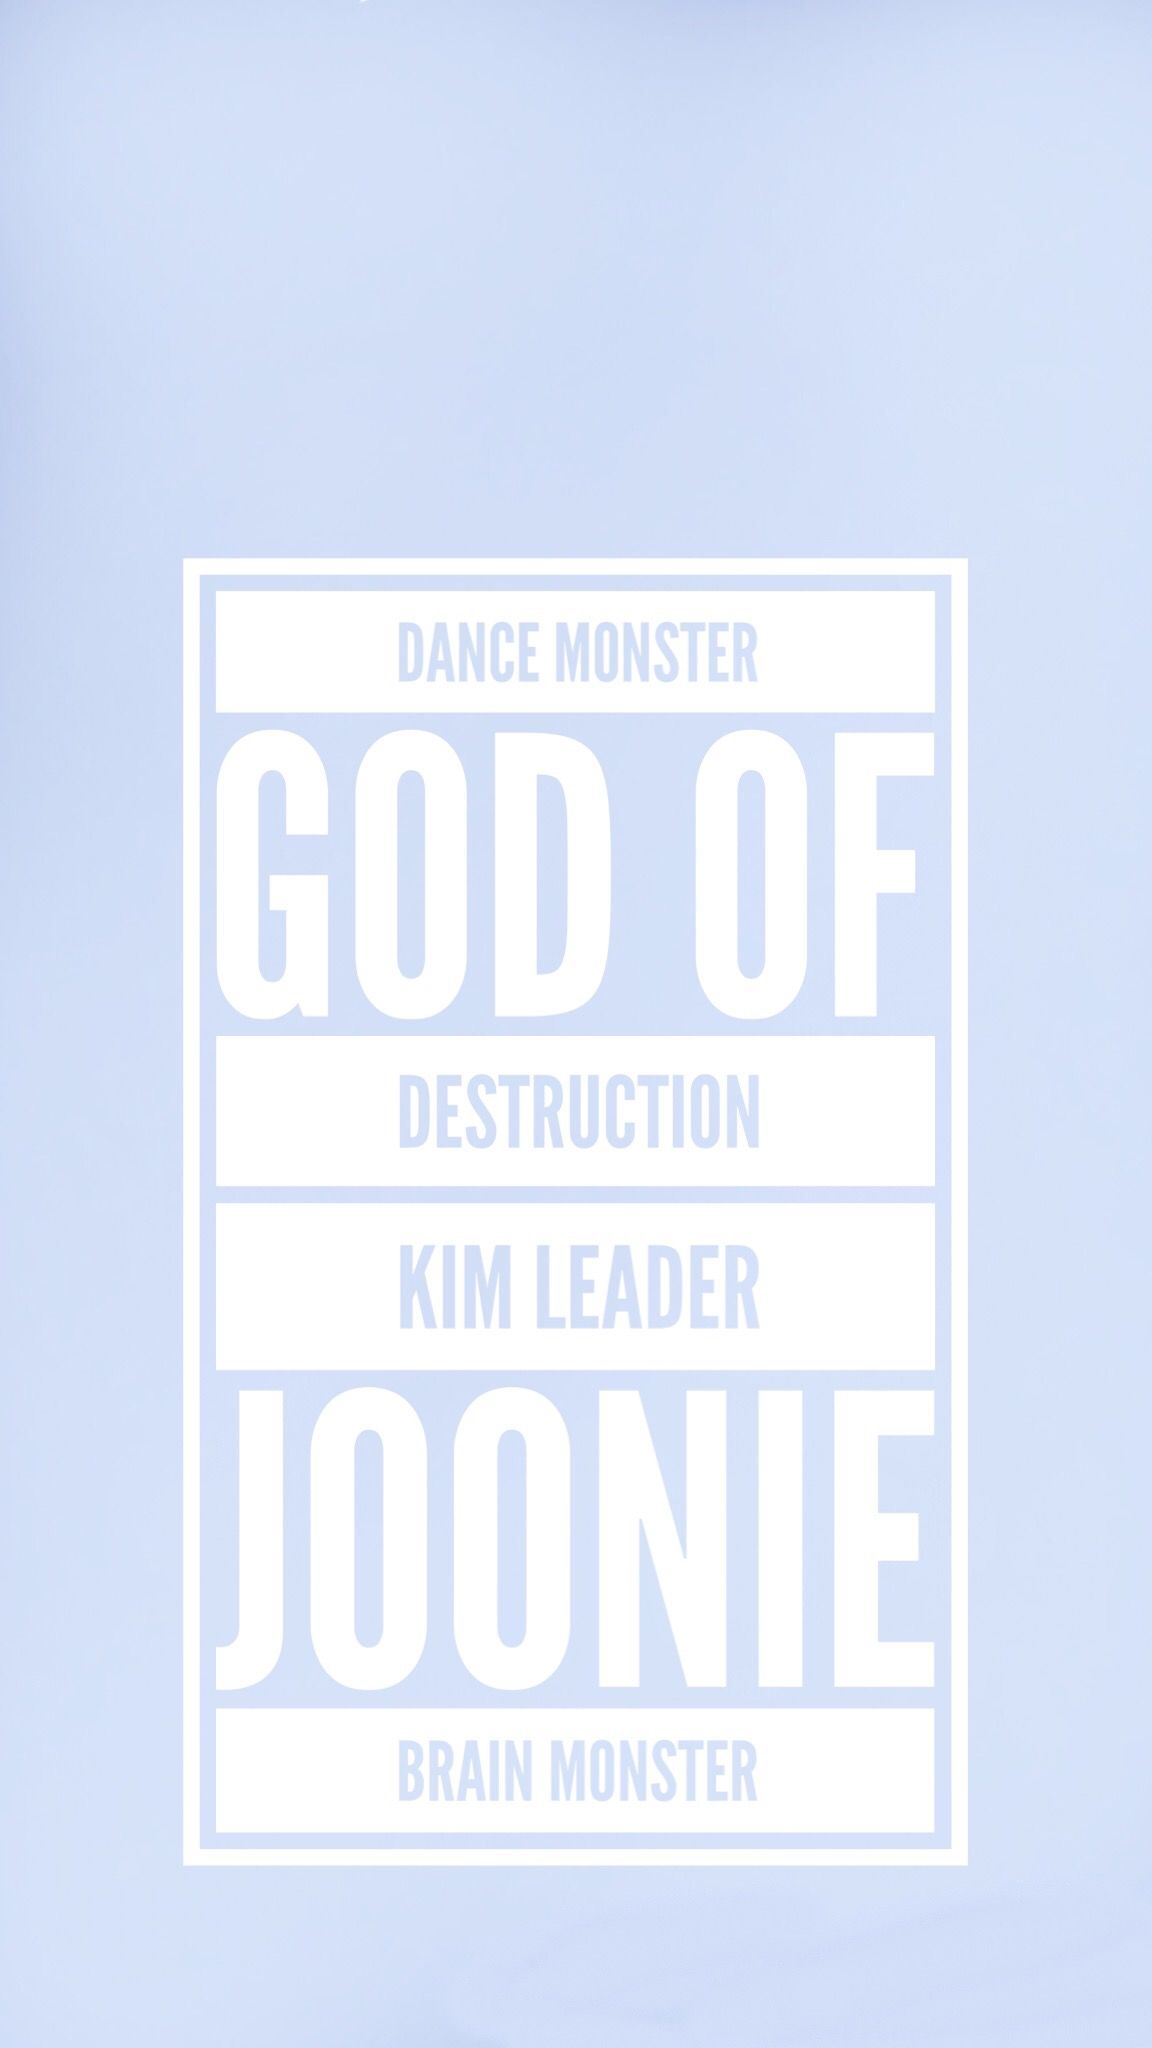 Bts Rap Monster Lockscreen Wallpaper Kim Namjoon Kpop